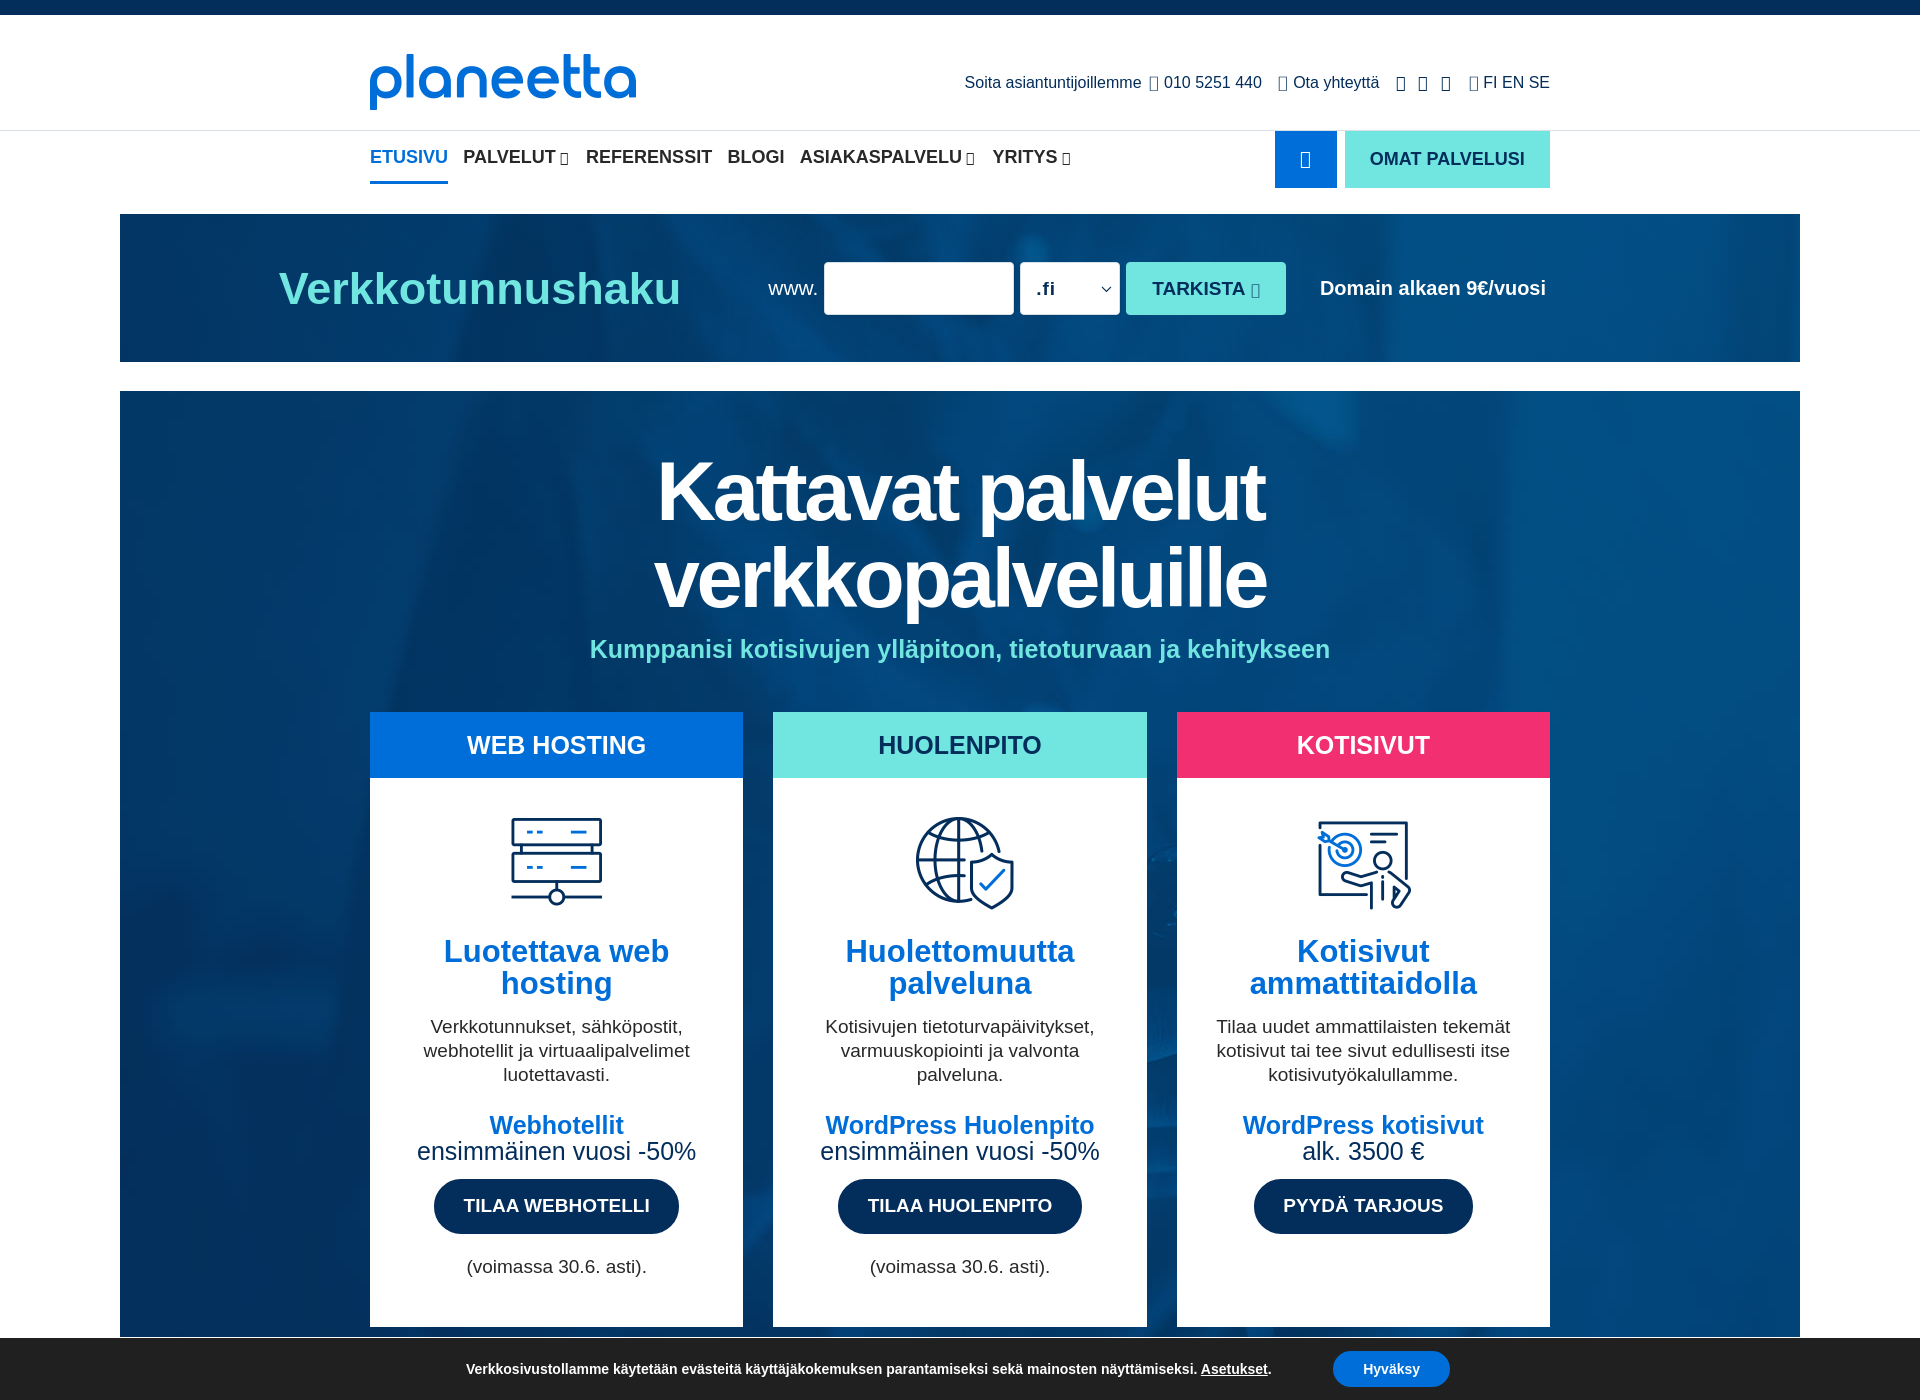 Skärmdump för hyväryhti.fi